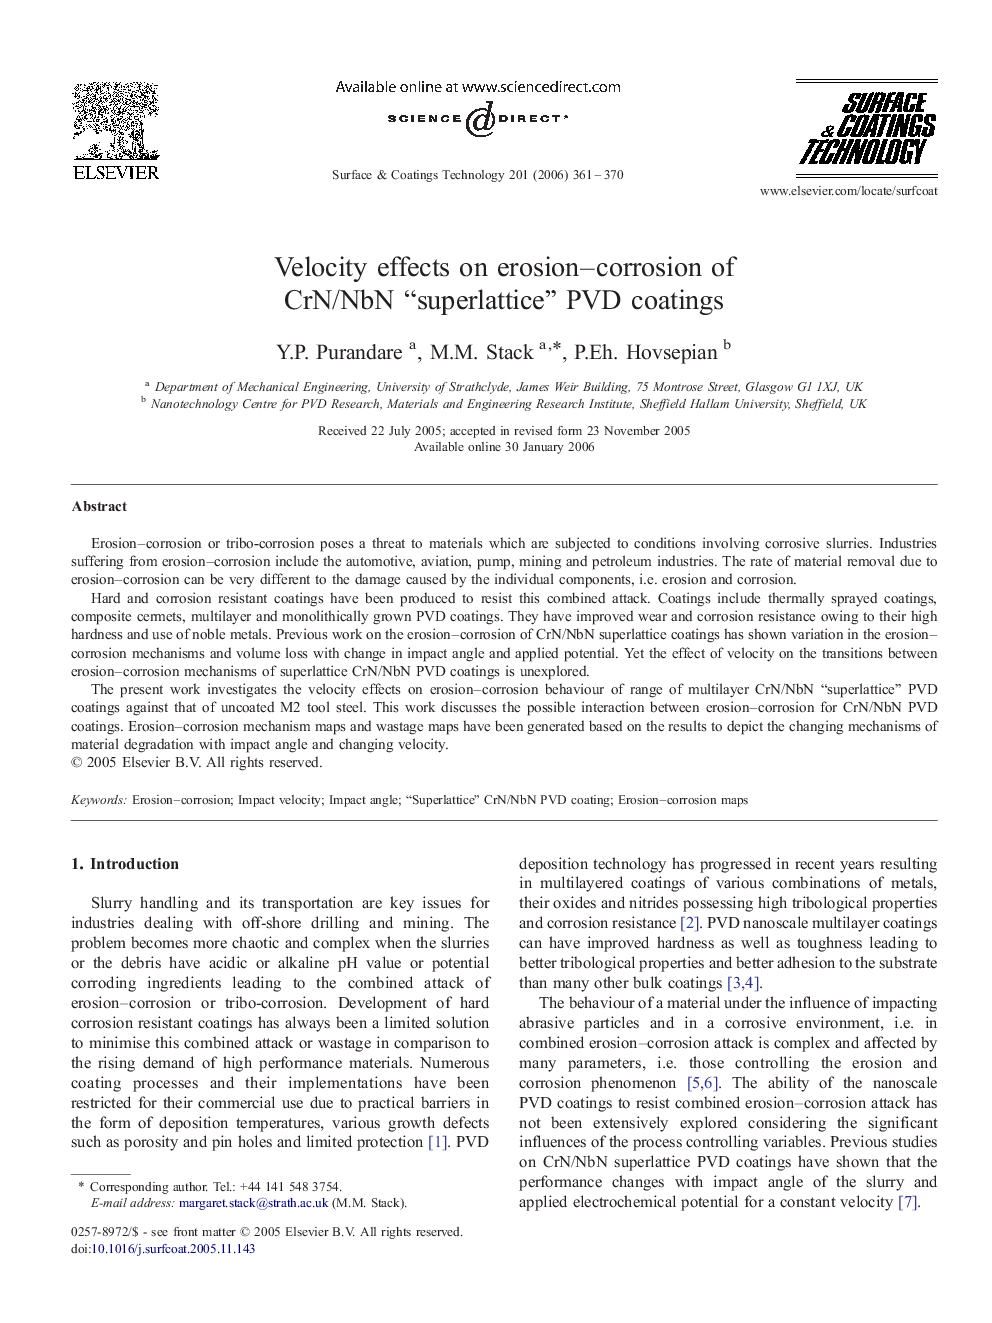 Velocity effects on erosion-corrosion of CrN/NbN “superlattice” PVD coatings